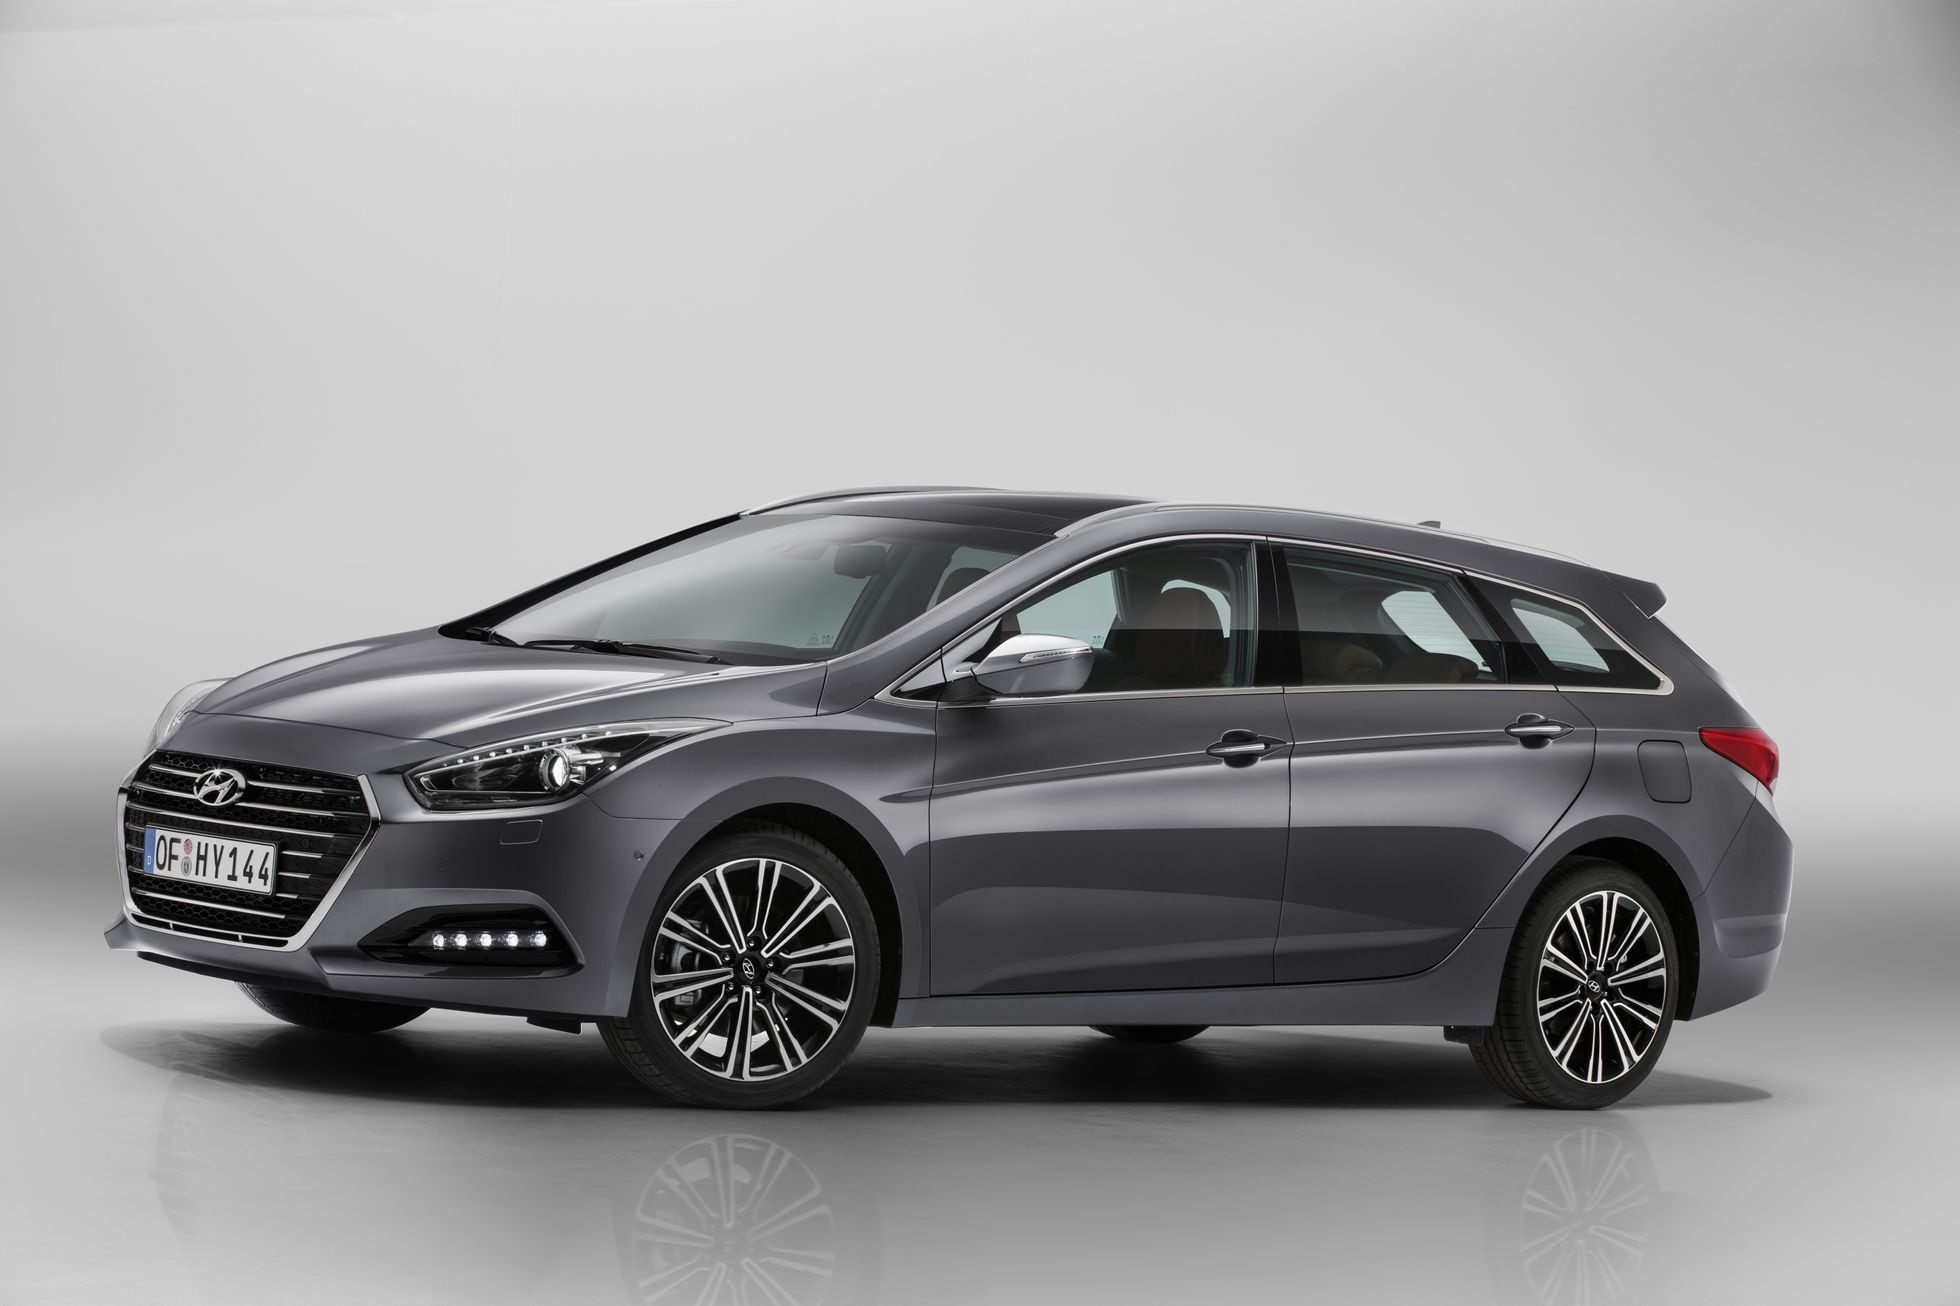 Hyundai i40 facelift - 2015